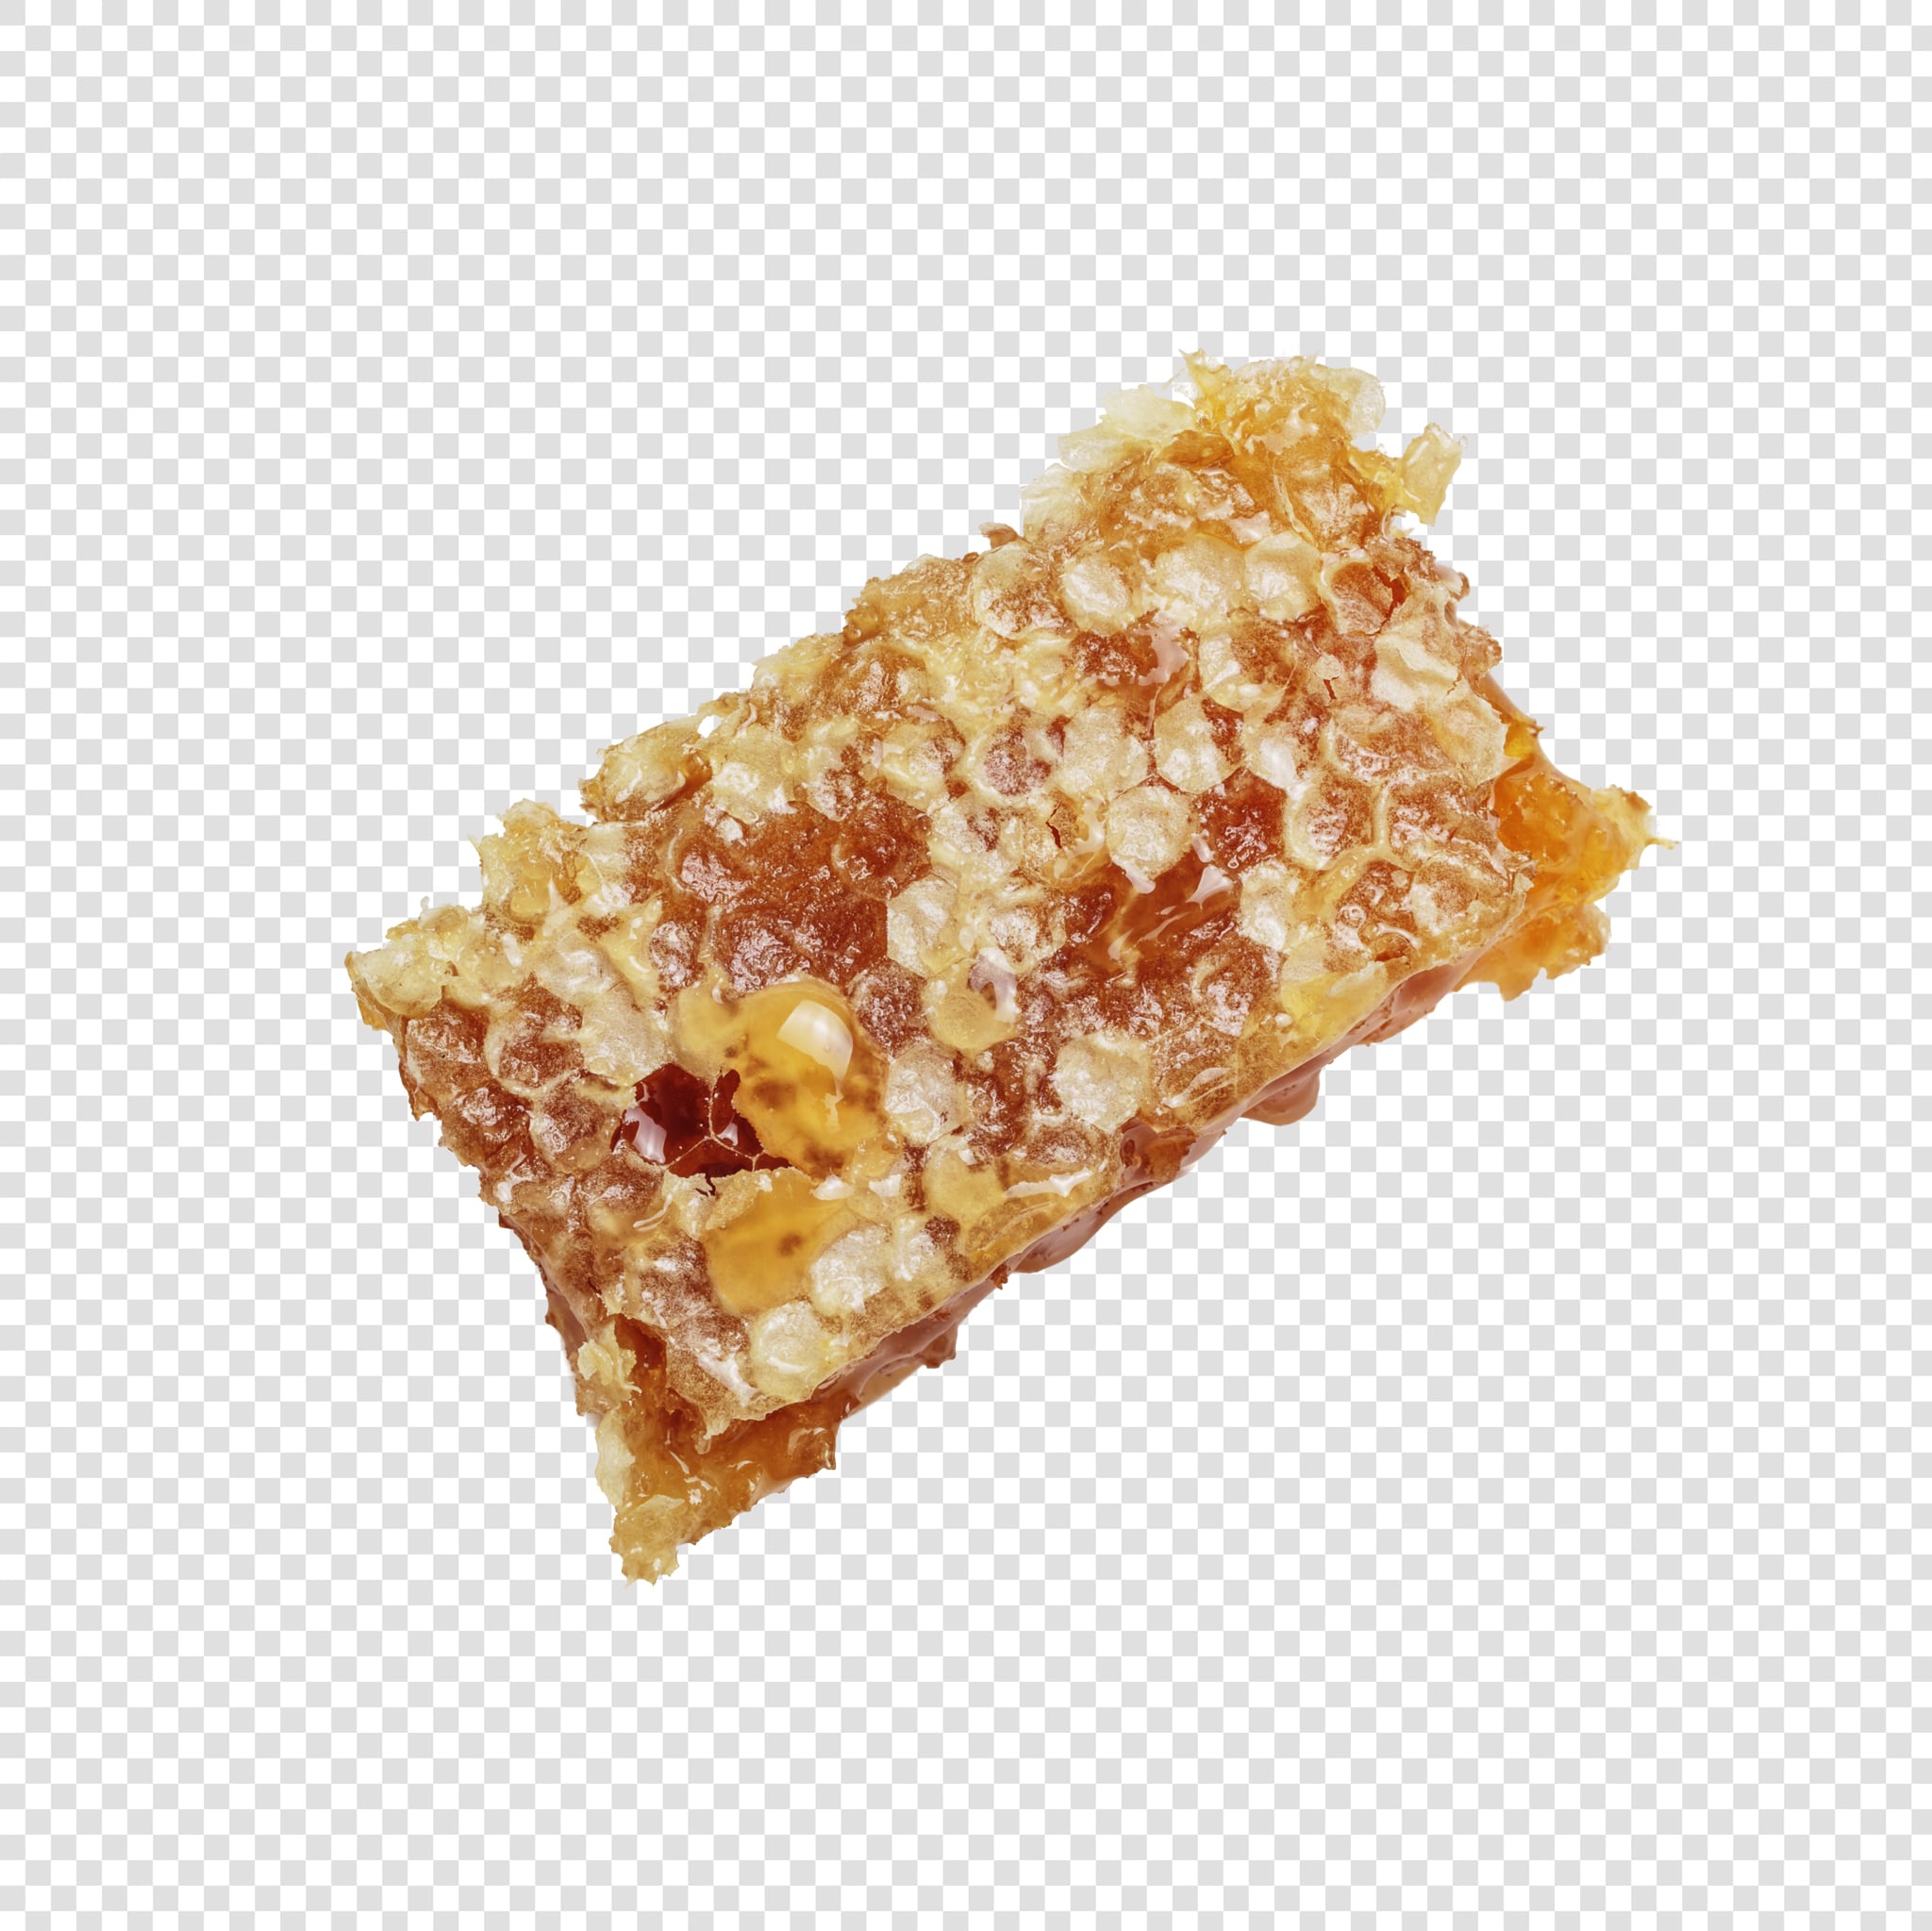 Honey PSD isolated image